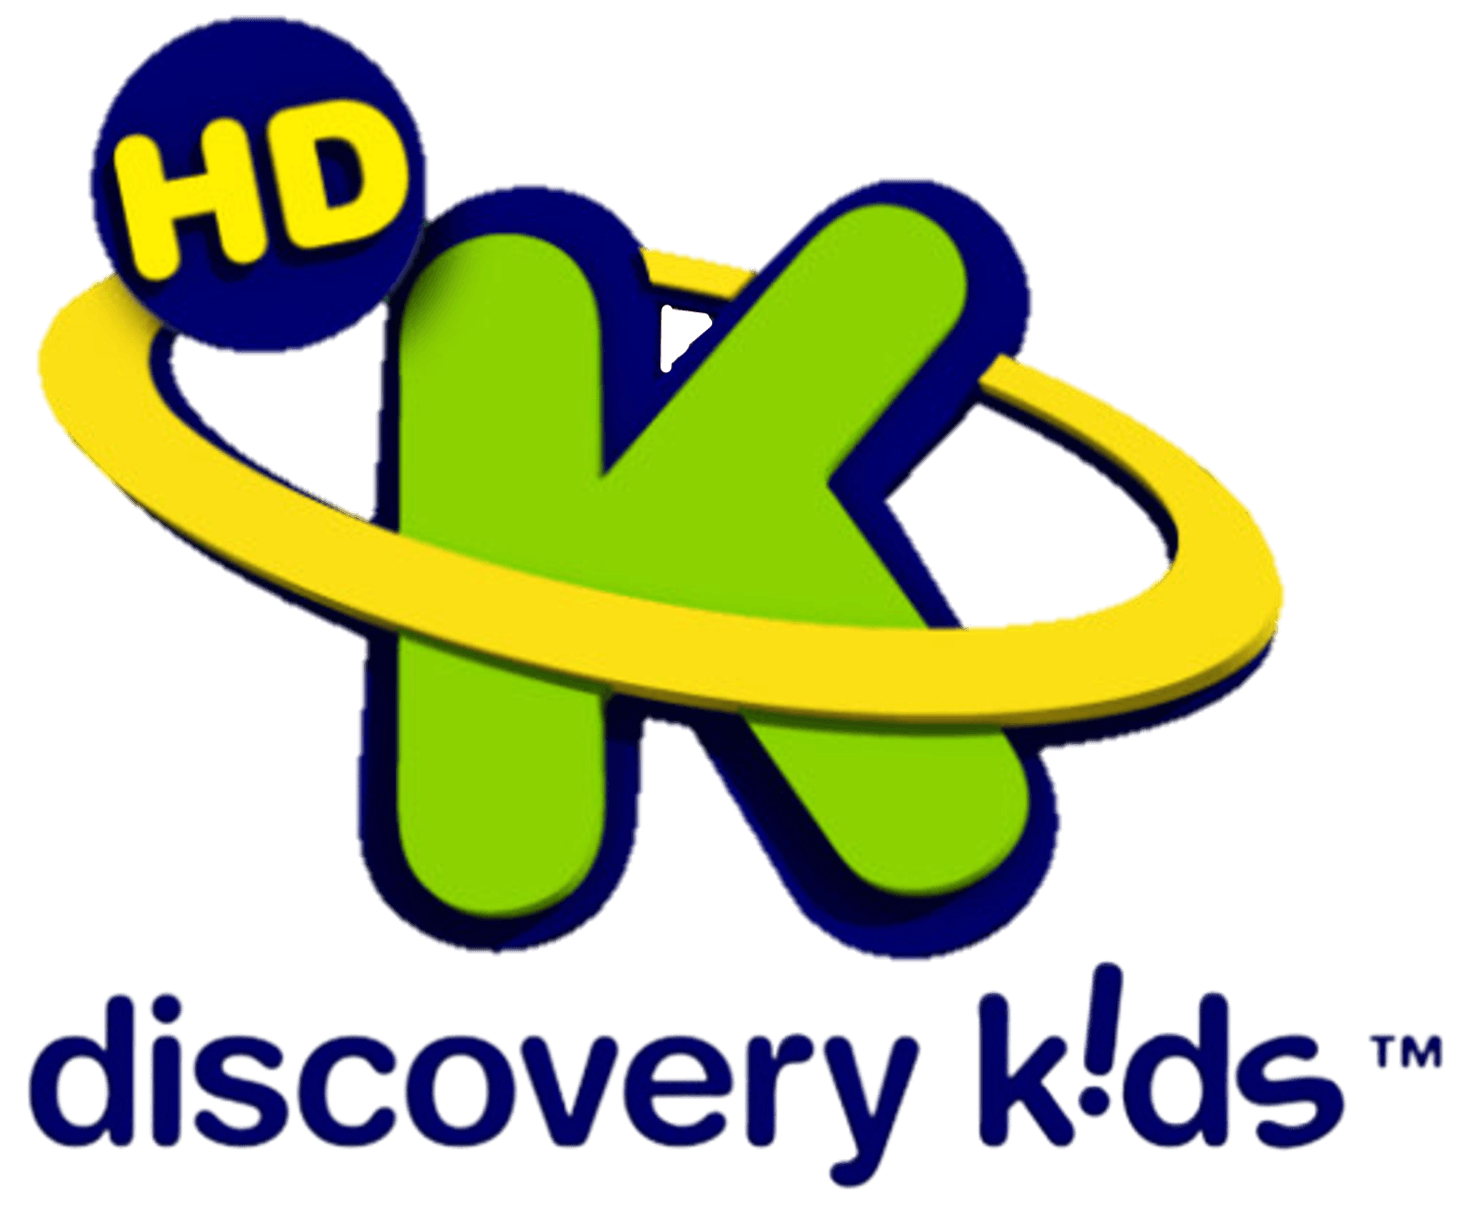 Discovery Kids Logo - Discovery Kids HD 2013 2016 : trgrt